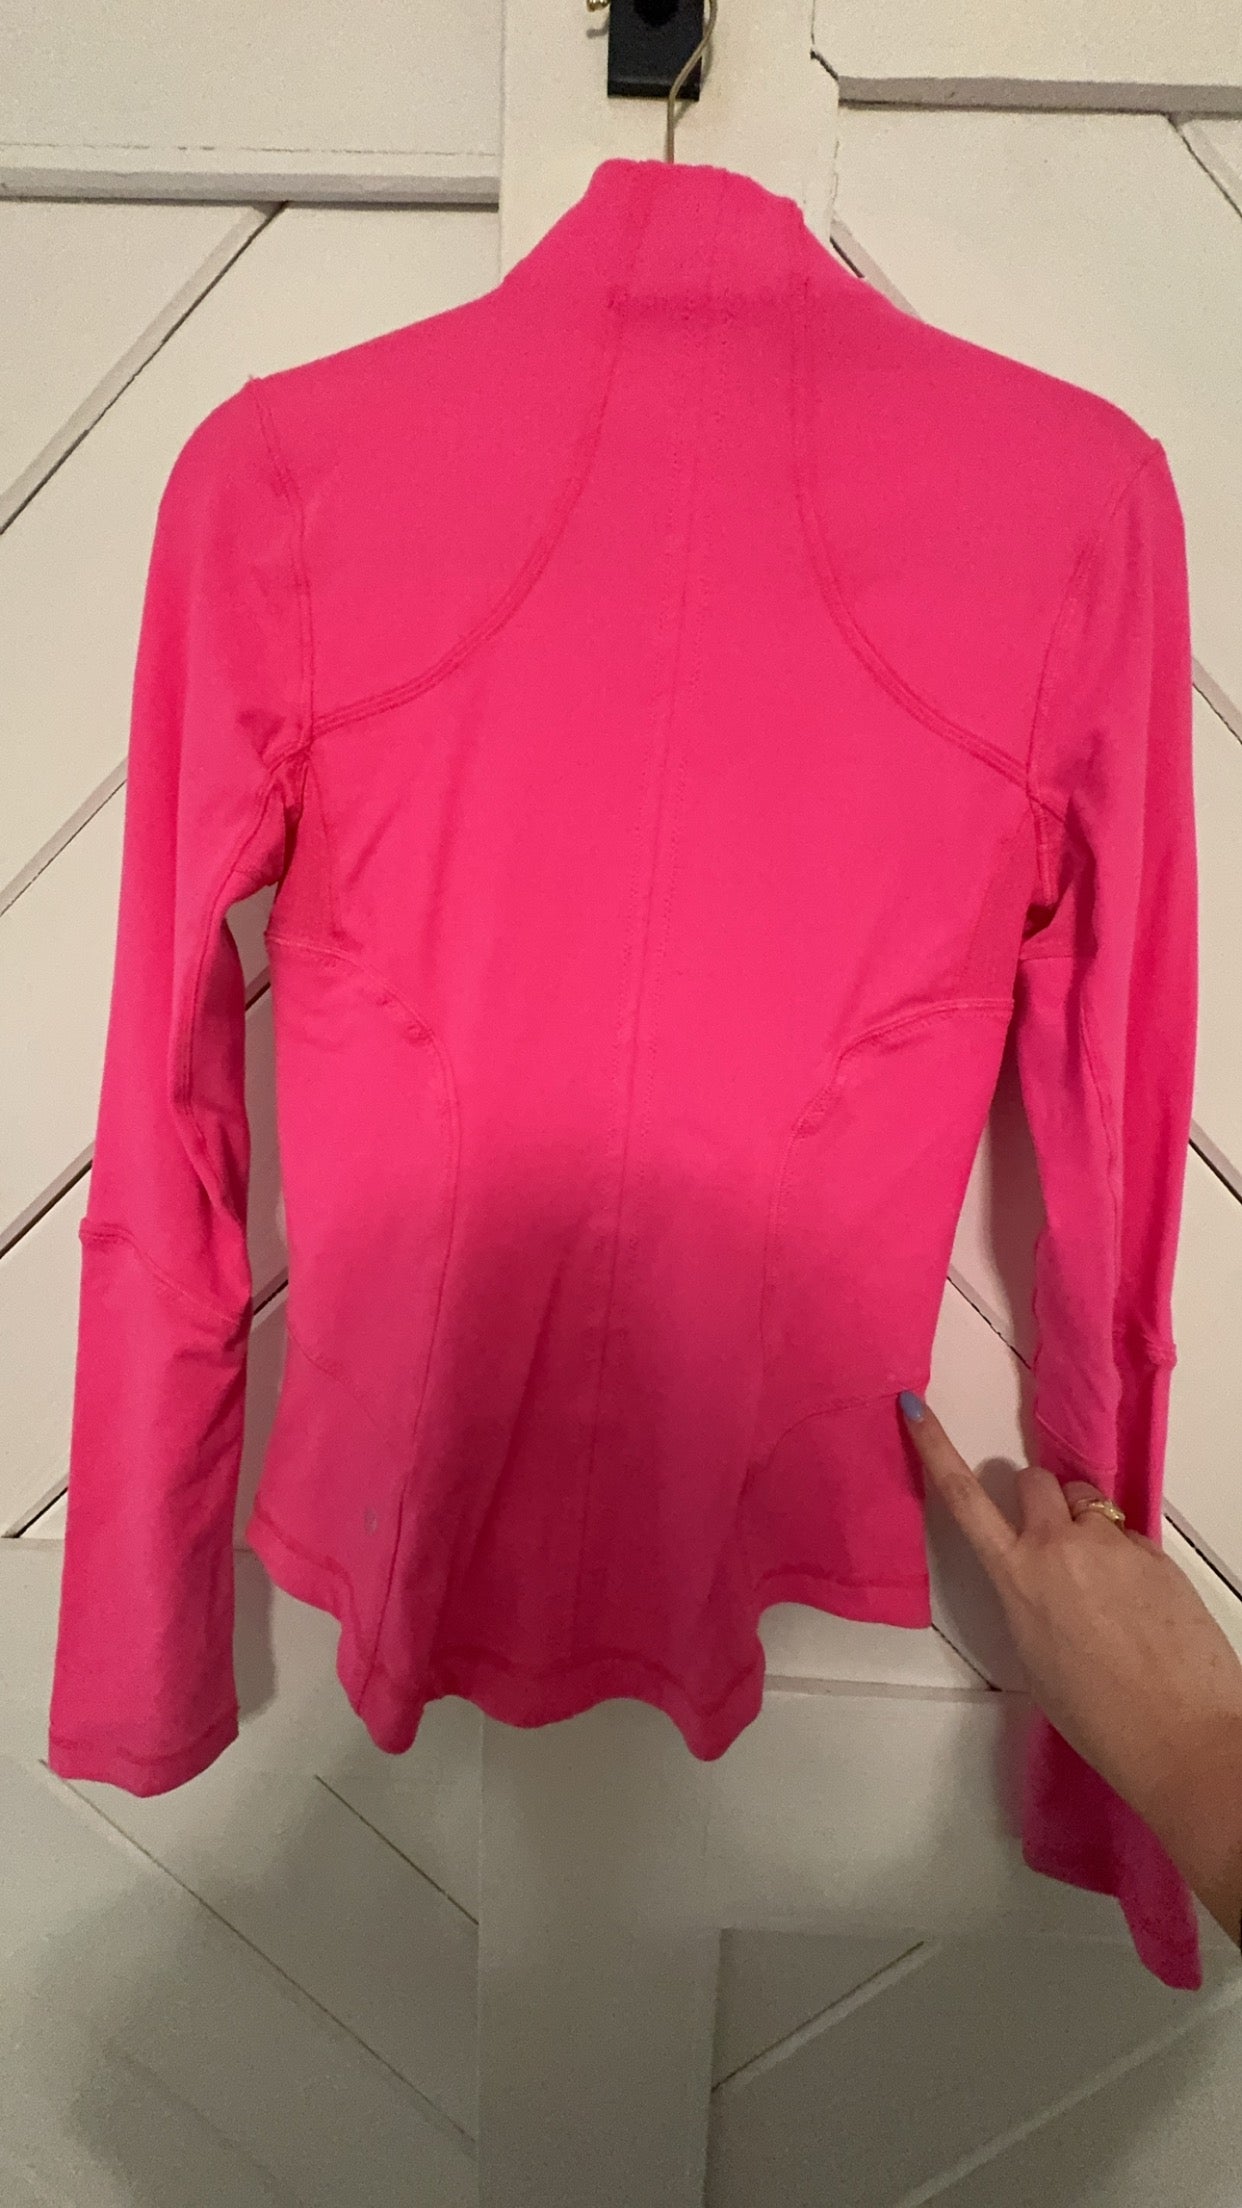 Lululemon Define Jacket - Pink - Size 6 (Small / Medium)